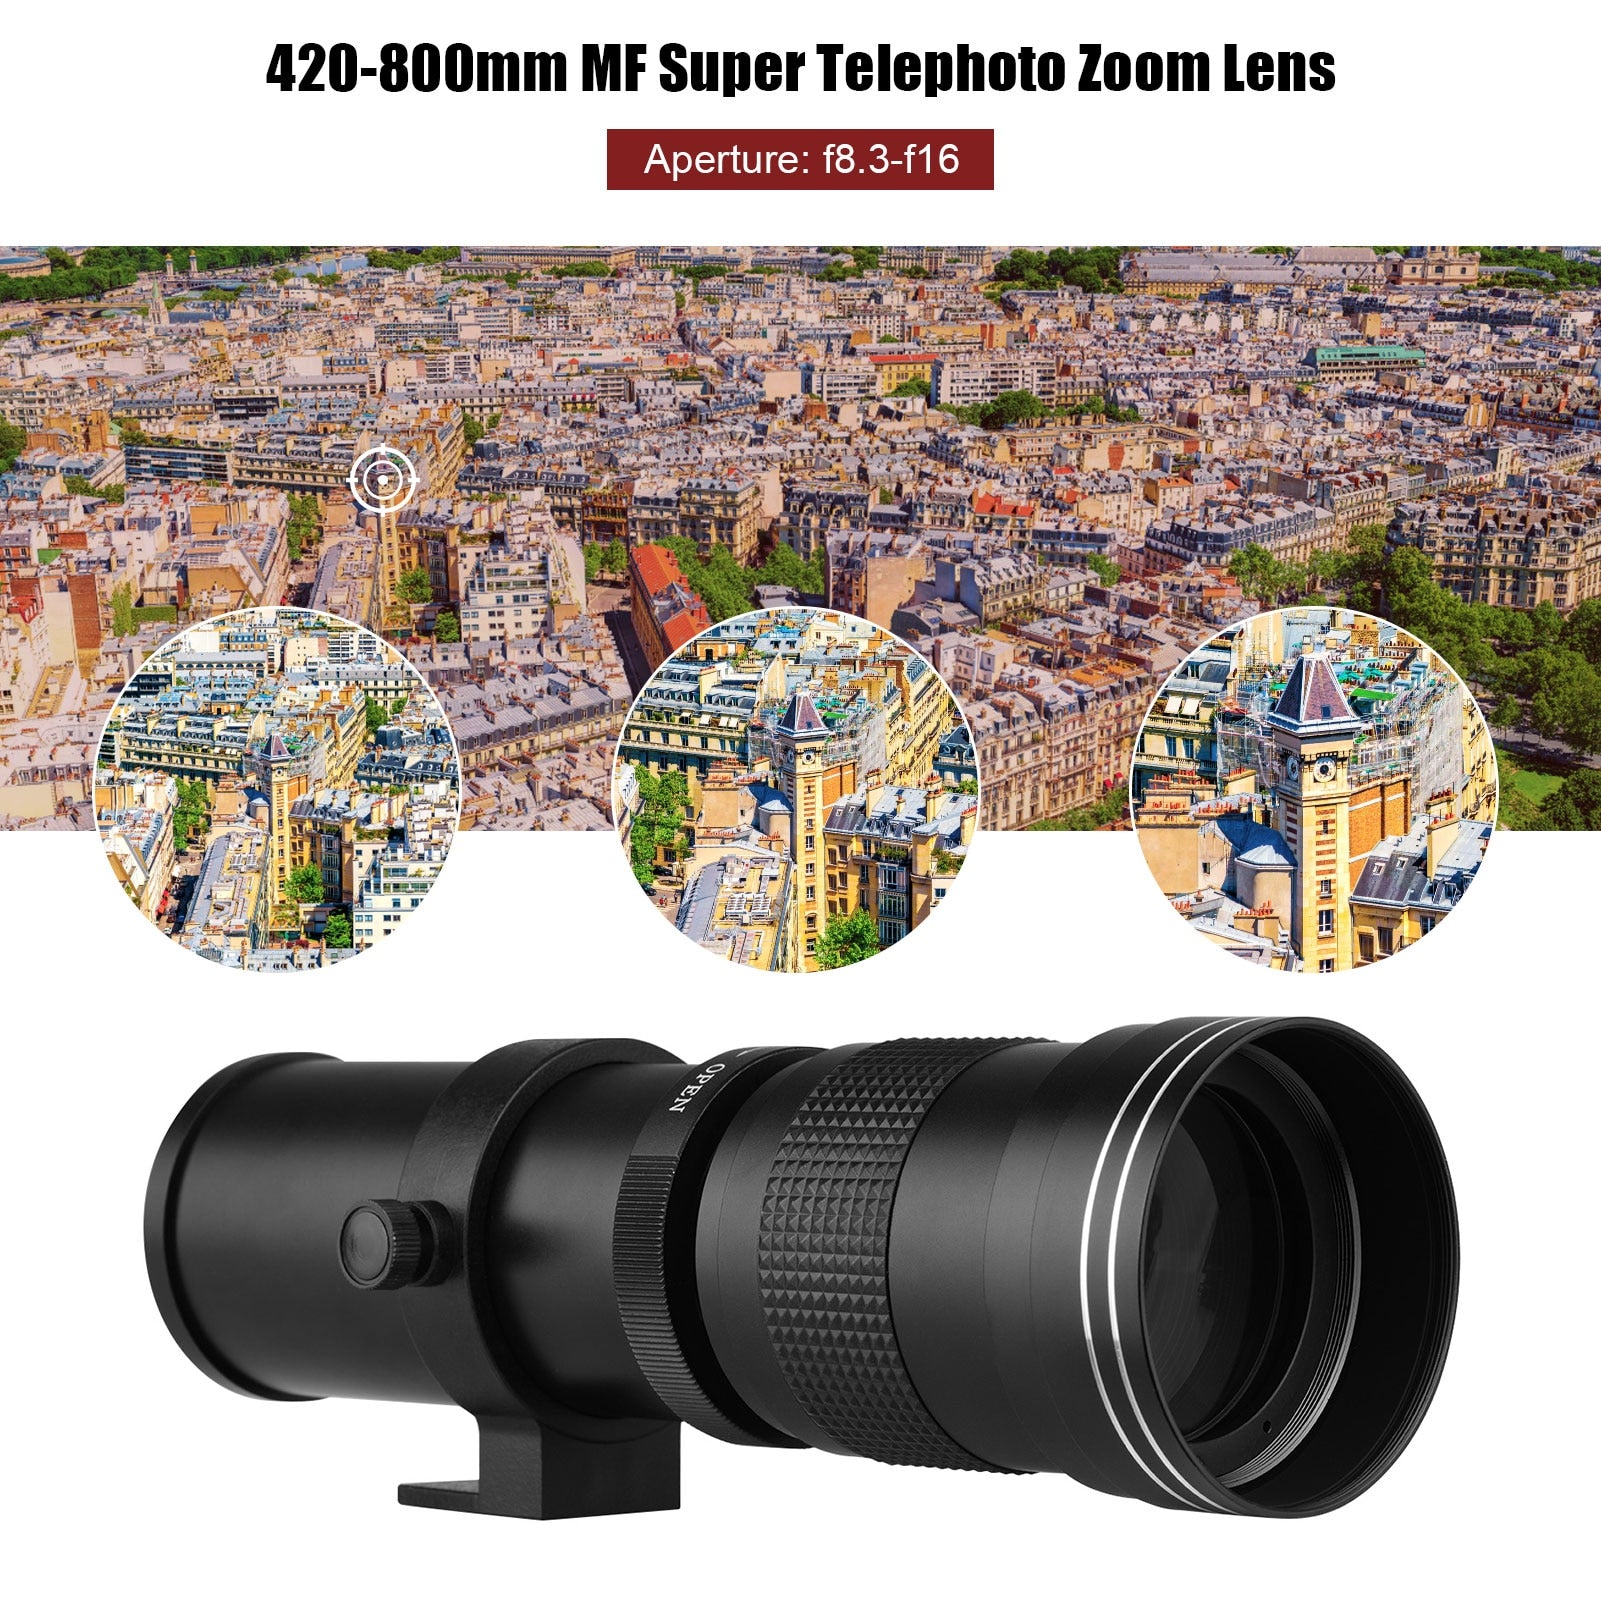 Super Telephoto Zoom Lens